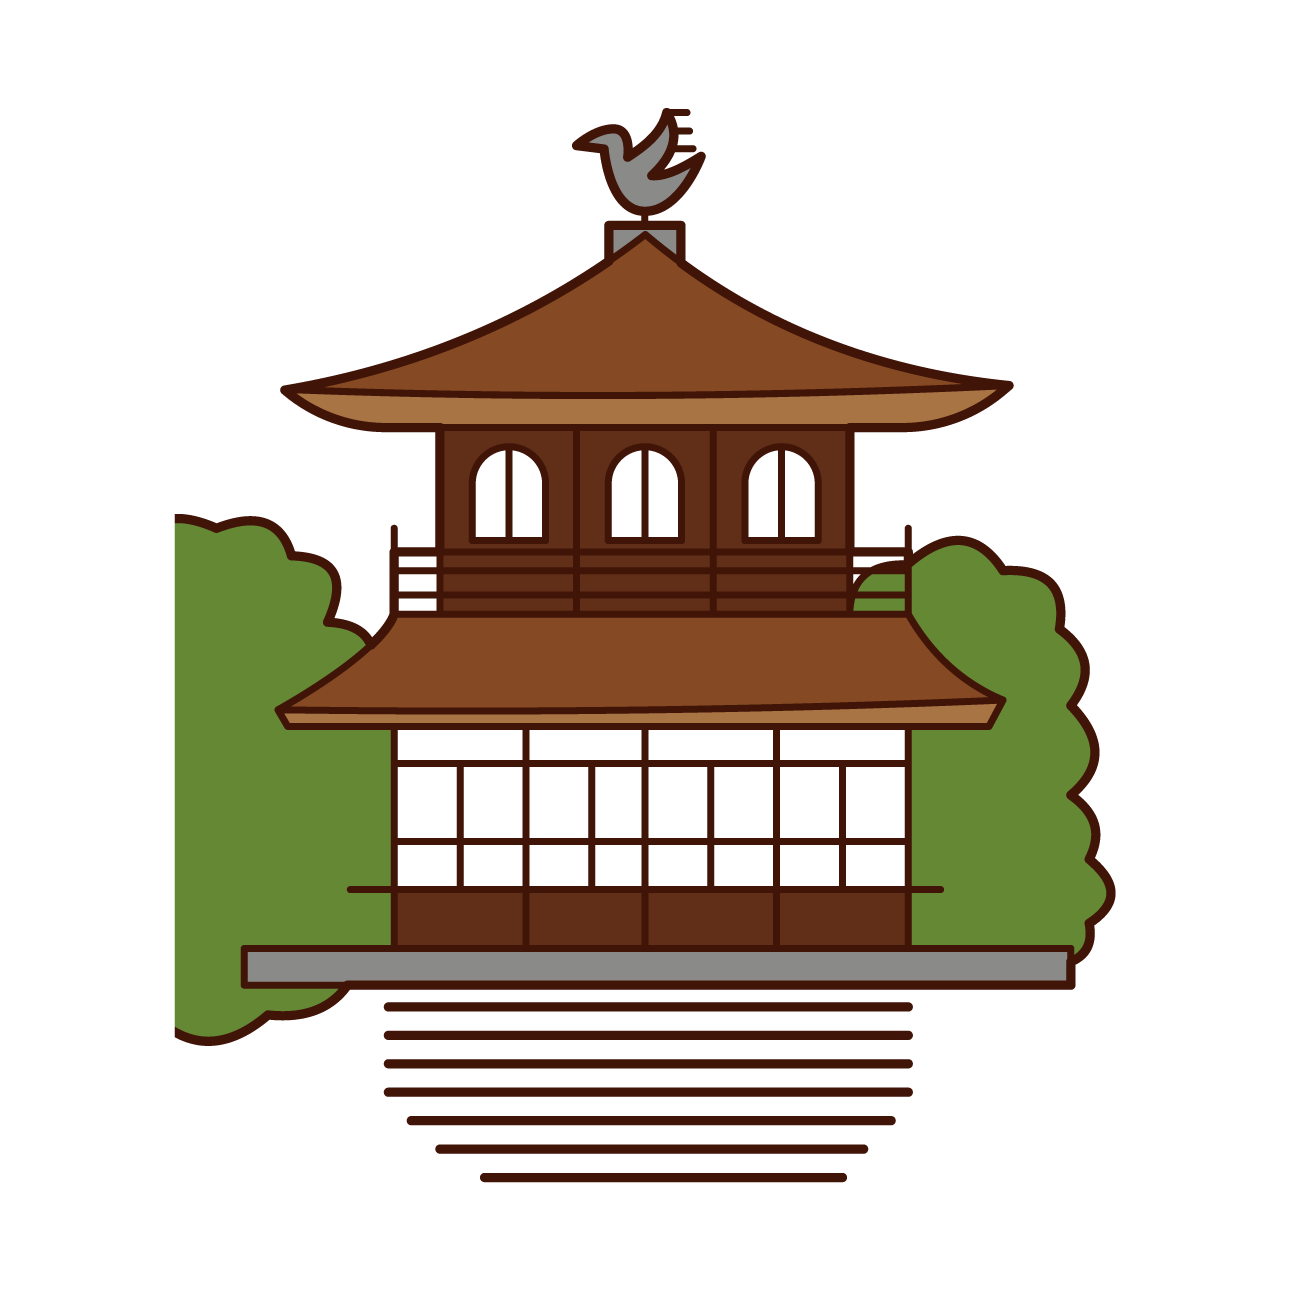 Illustration of Ginkakuji Temple